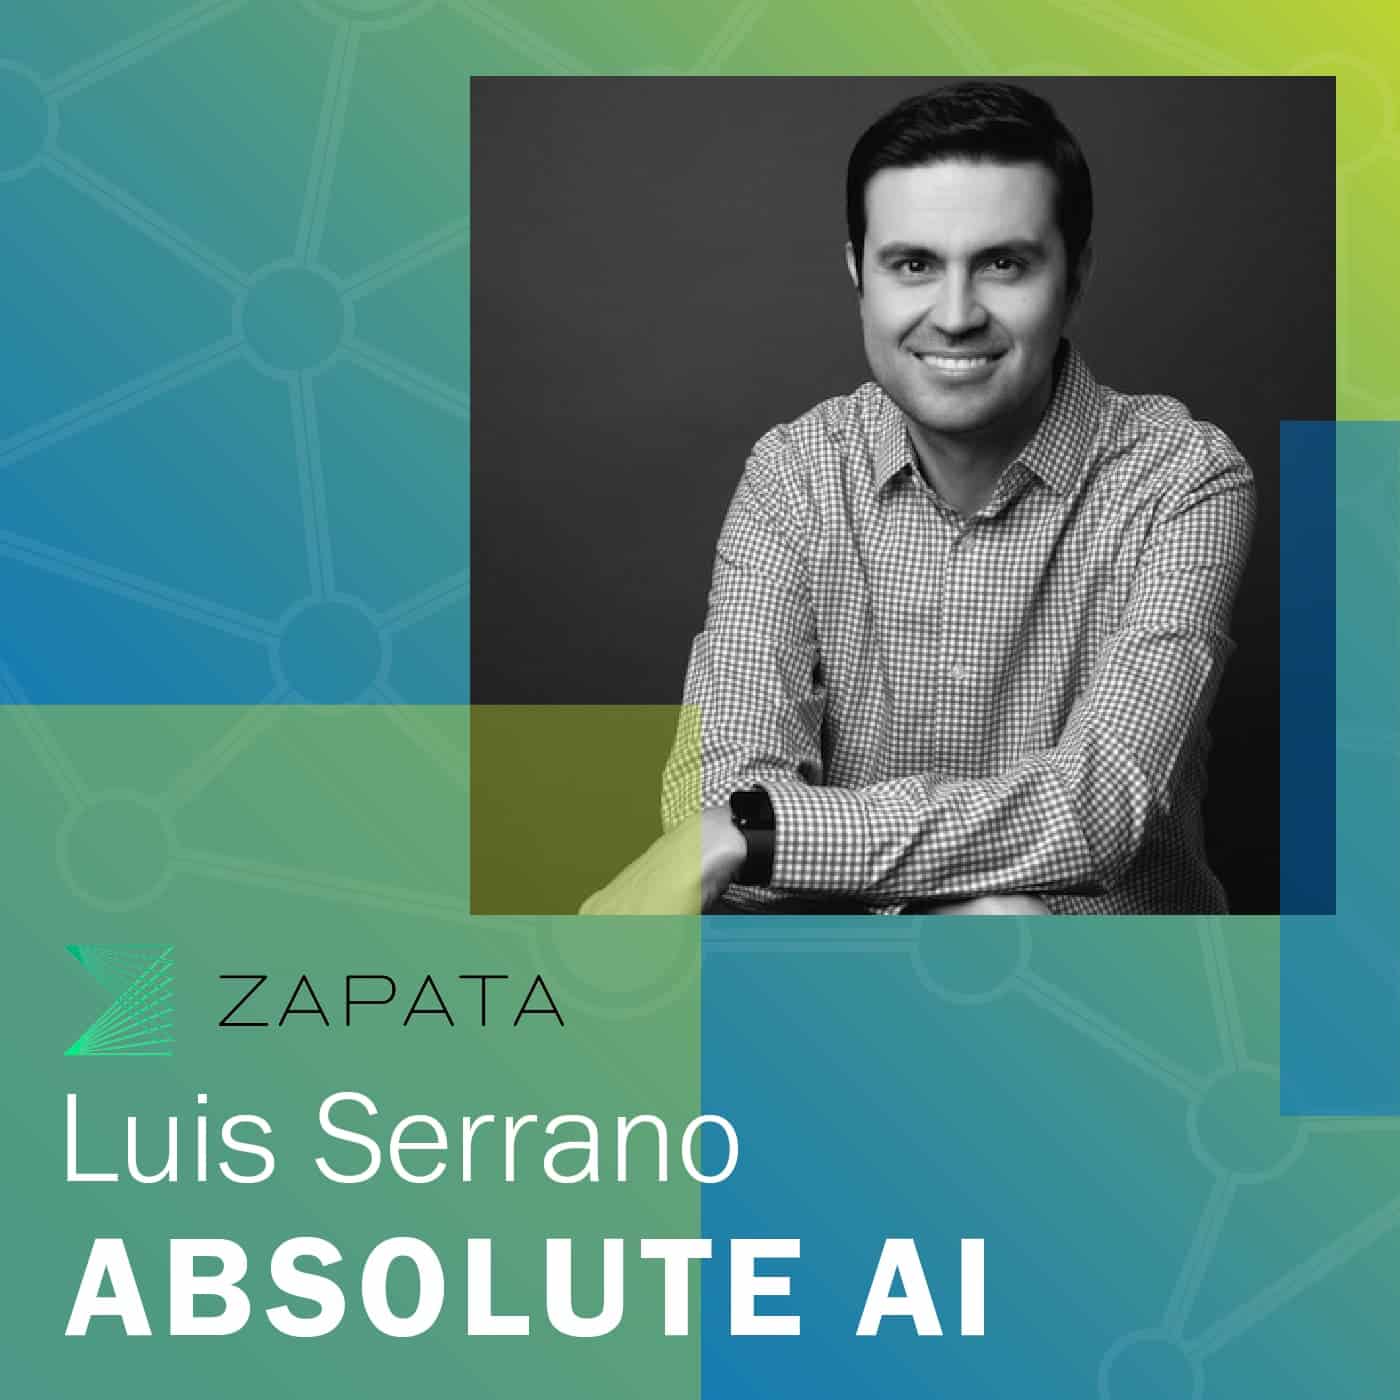 Absolute AI Podcast | Luis Serrano, Episode 4 — Innodata